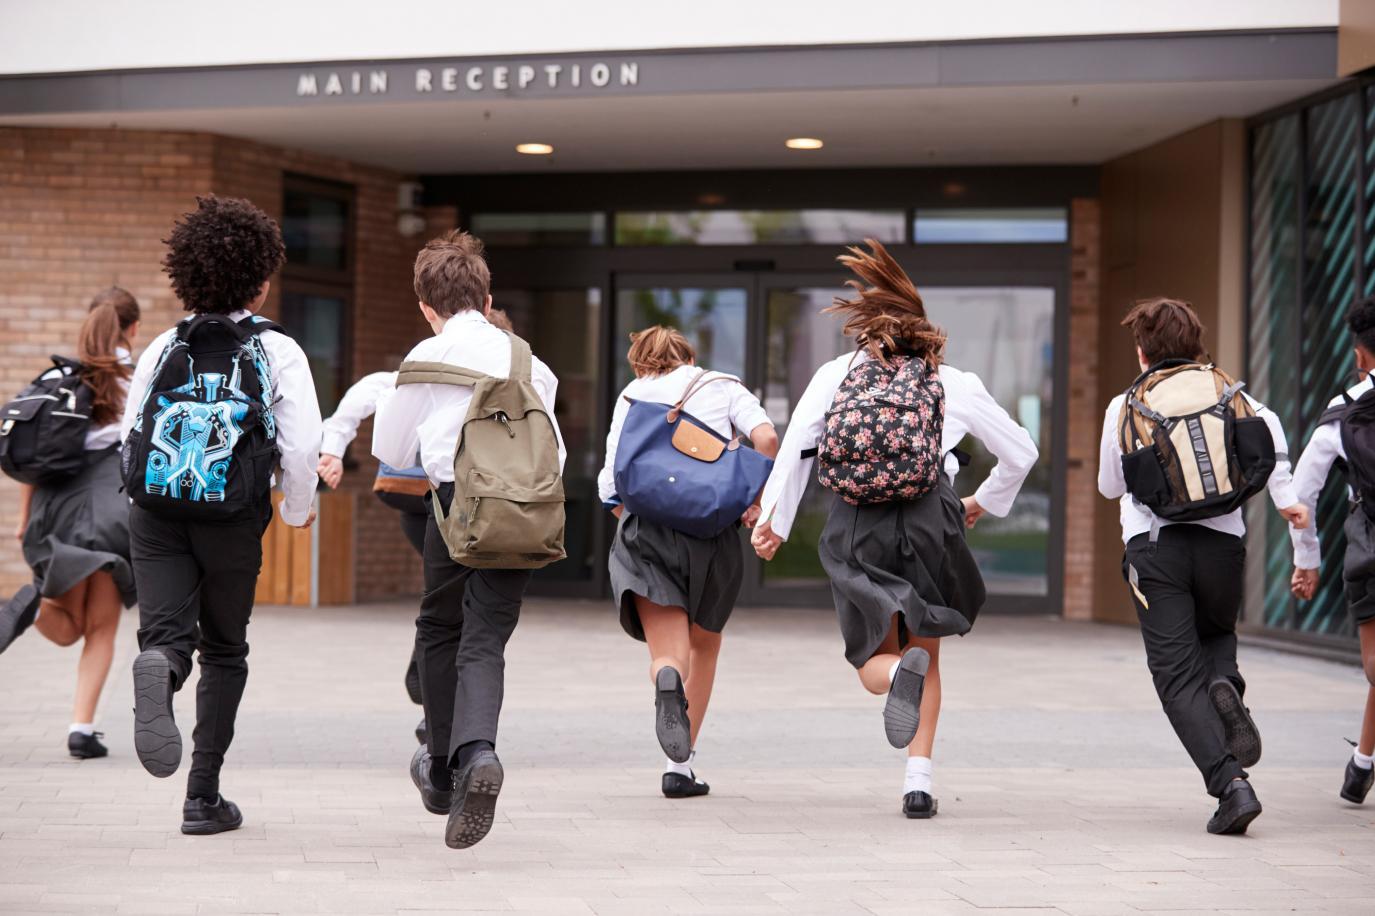 Children in school uniform and backpacks running towards a school building named 'Main Reception'